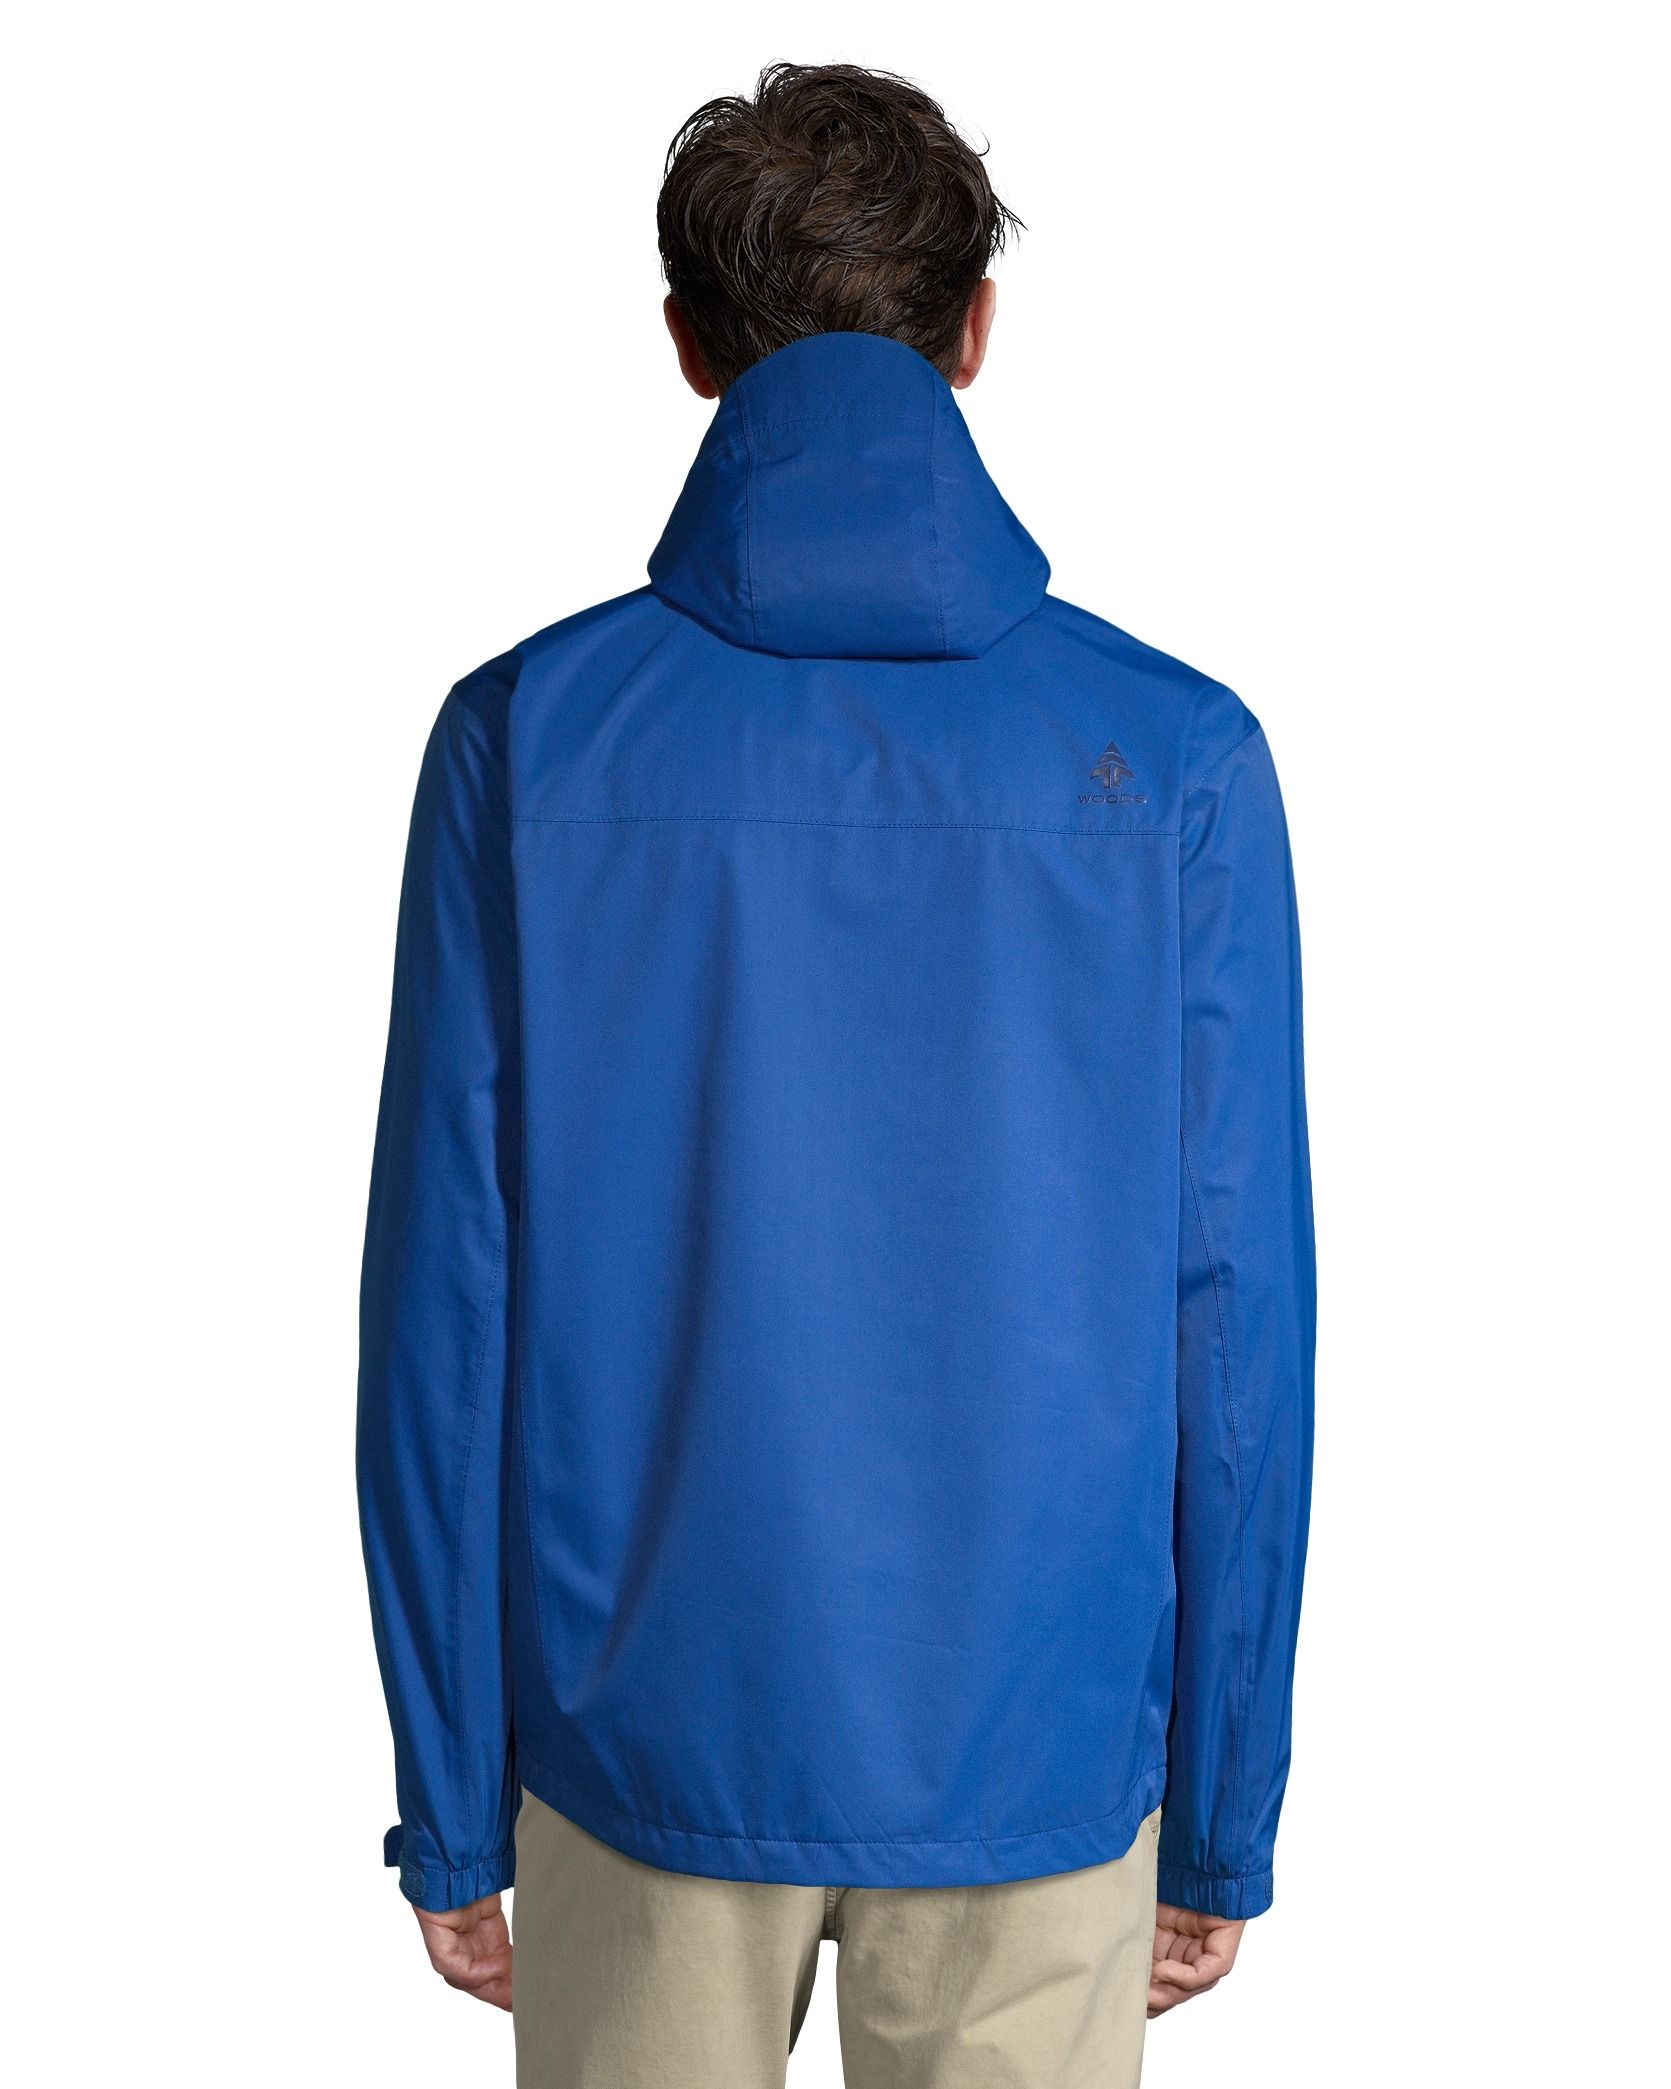 Woods Men's Toba 2L Hooded Rain Jacket, Waterproof, Breathable, Shell